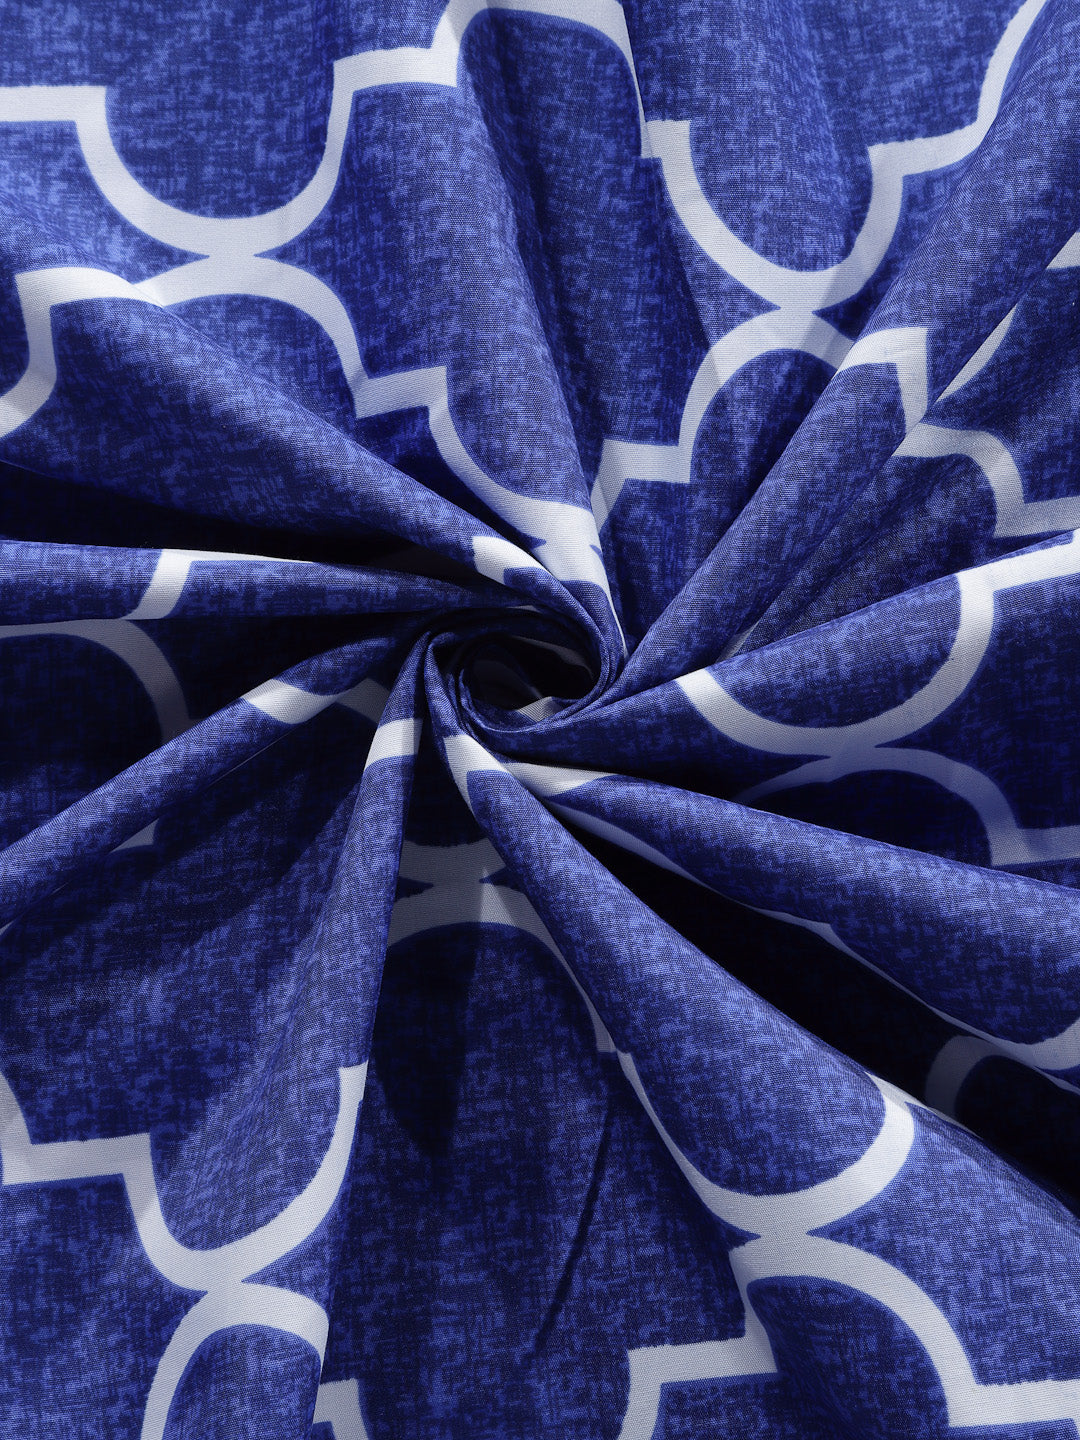 Arrabi Blue Indian TC Cotton Blend Single Size Bedsheet with 1 Pillow Cover (220 X 150 cm)